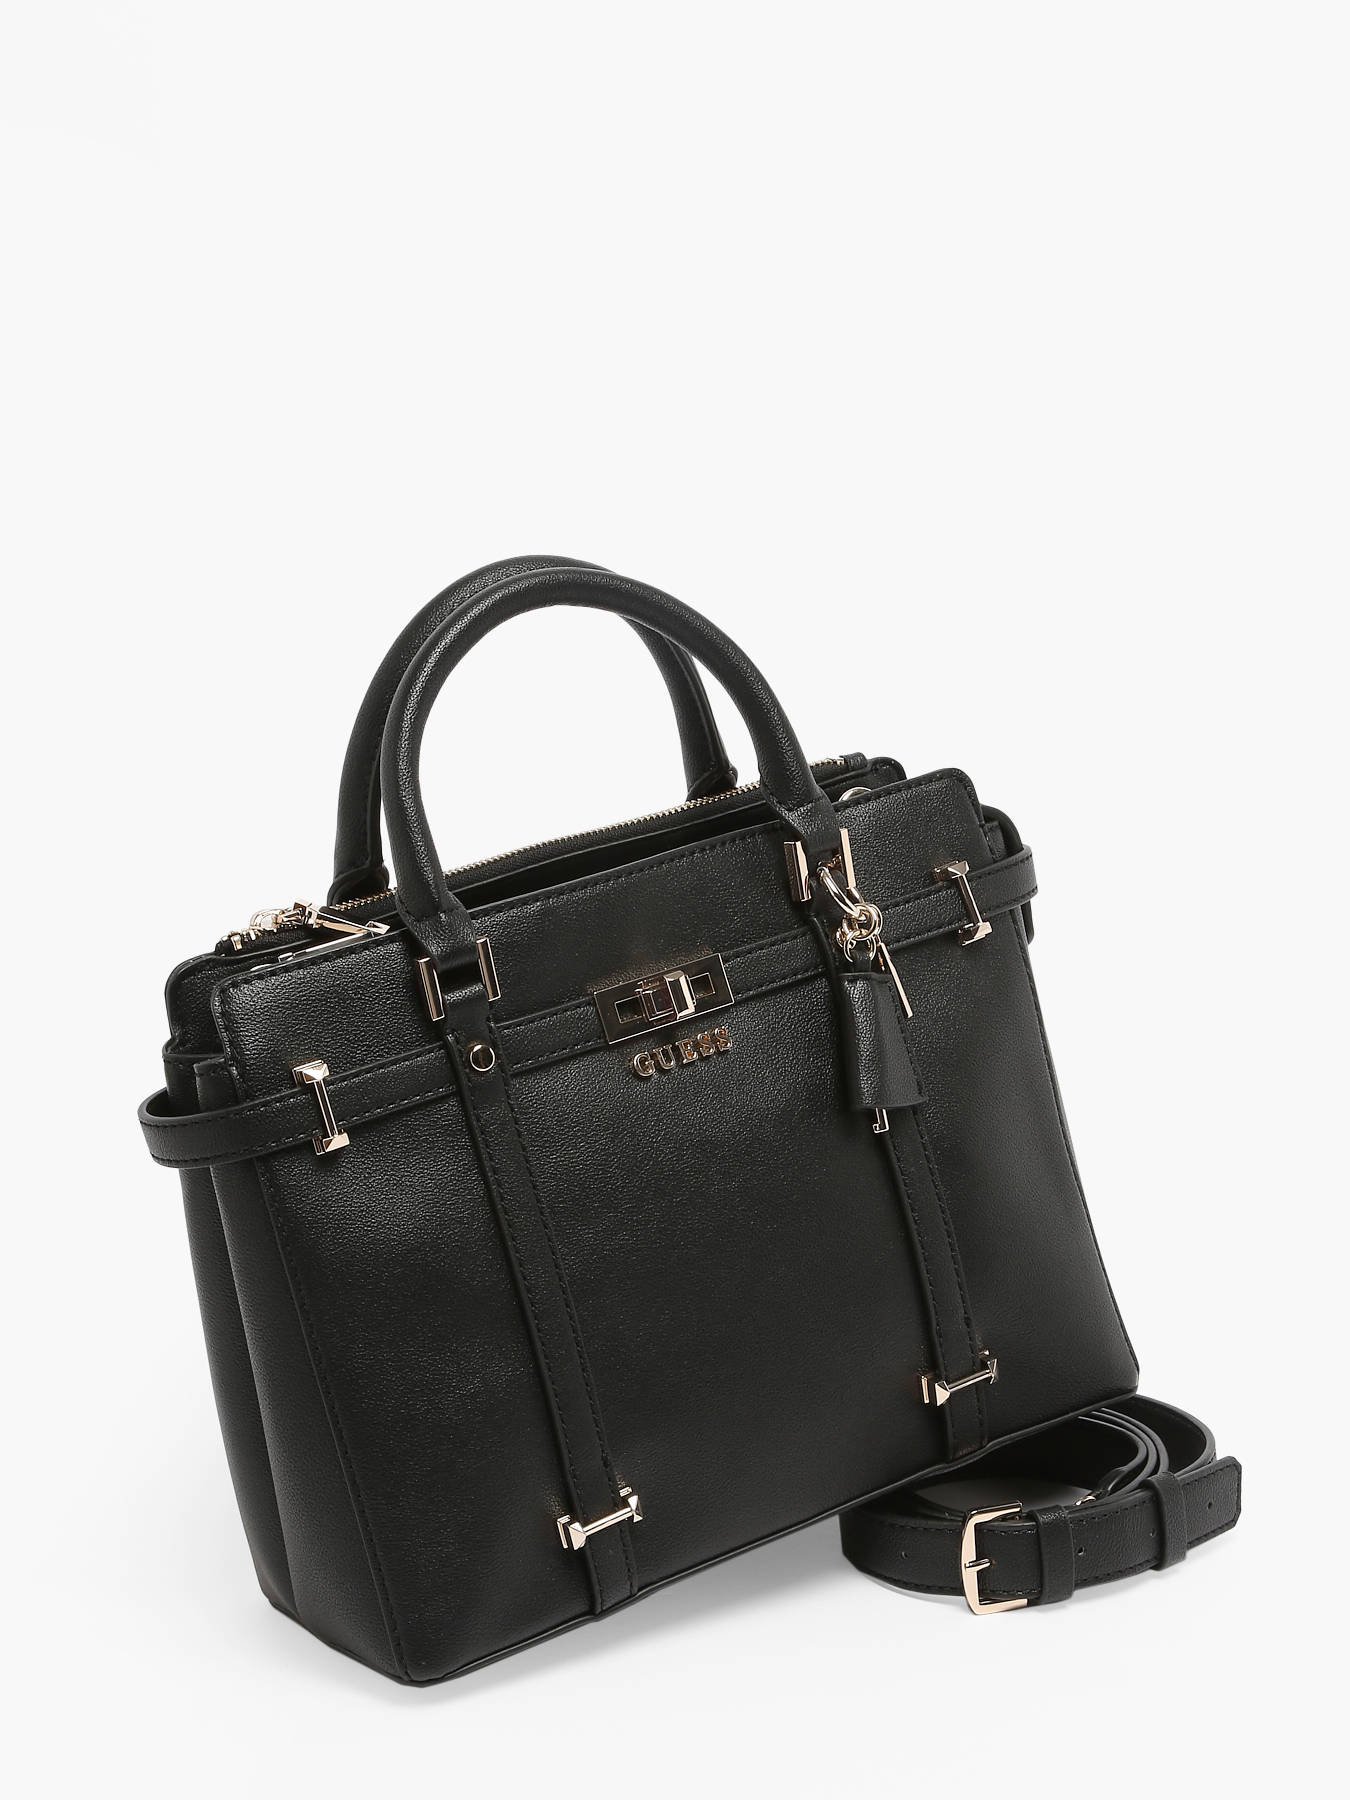 Handbag | Guess | Black | HWTB86 65220 | Free delivery | Carmi shoes and  fashion